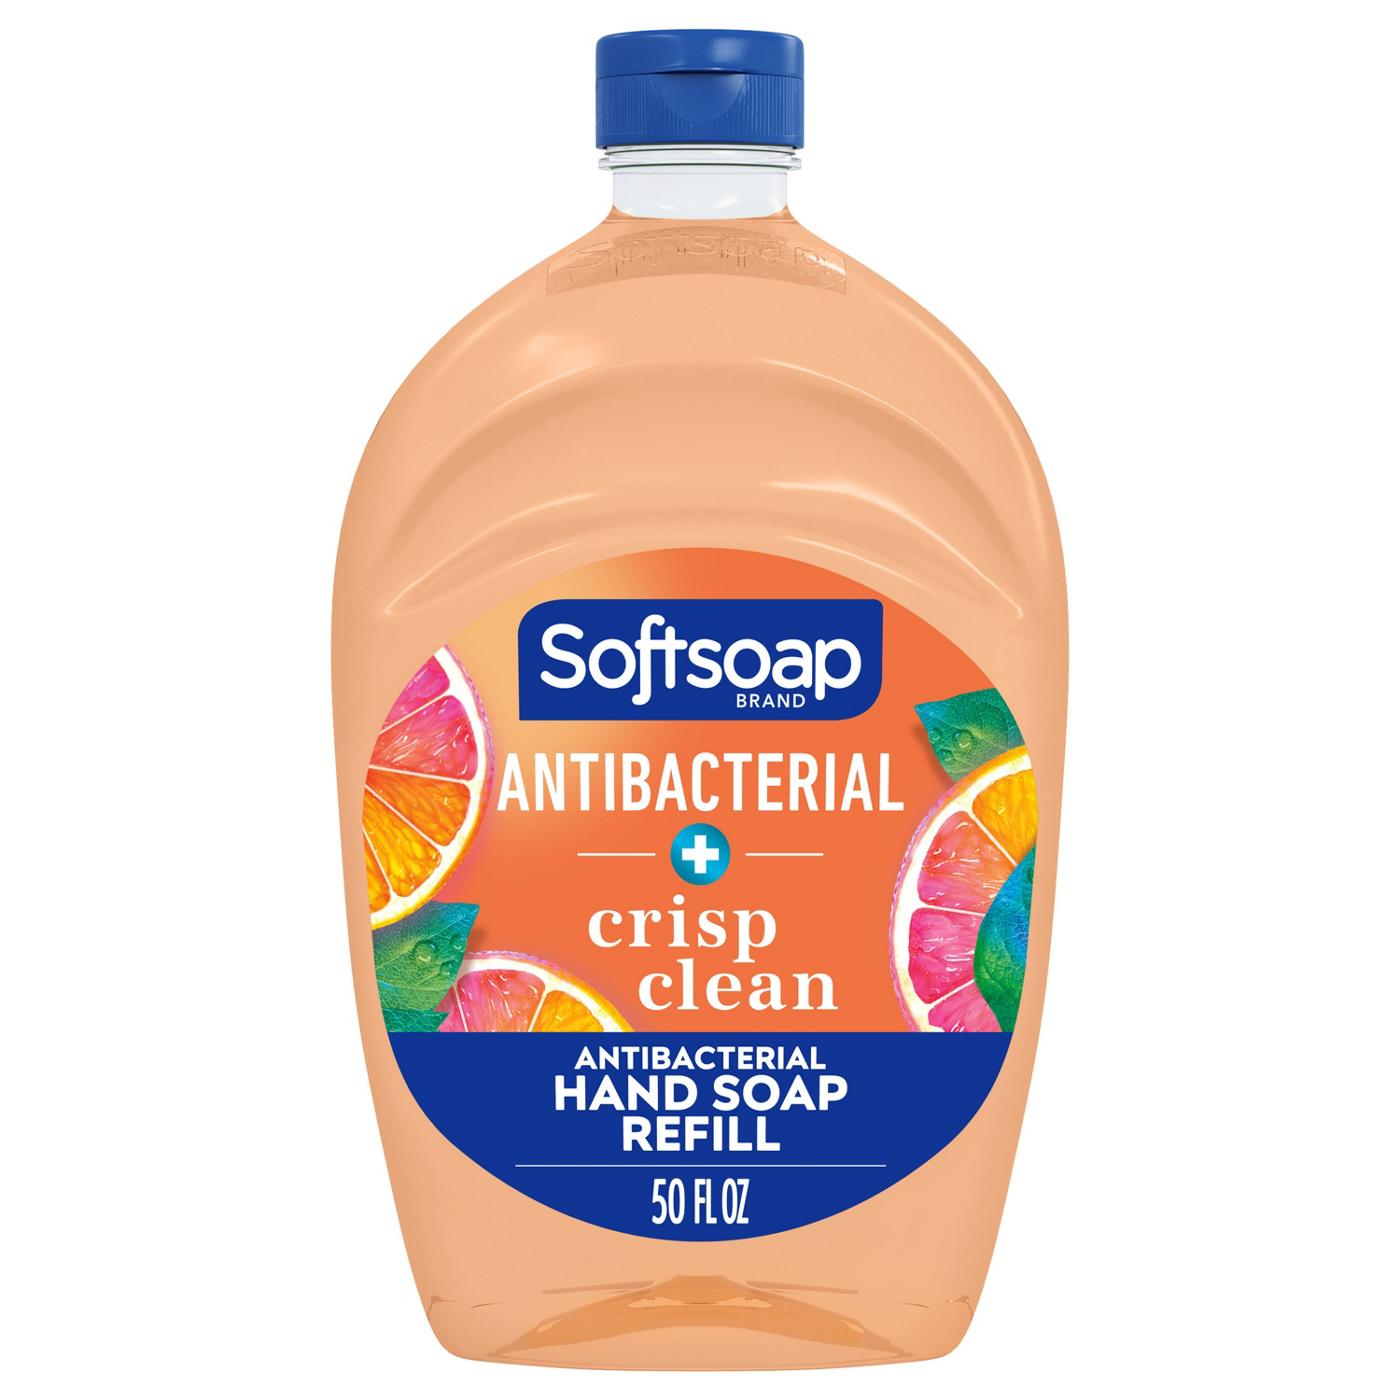 Softsoap Antibacterial Hand Soap Refill - Crisp Clean; image 1 of 8